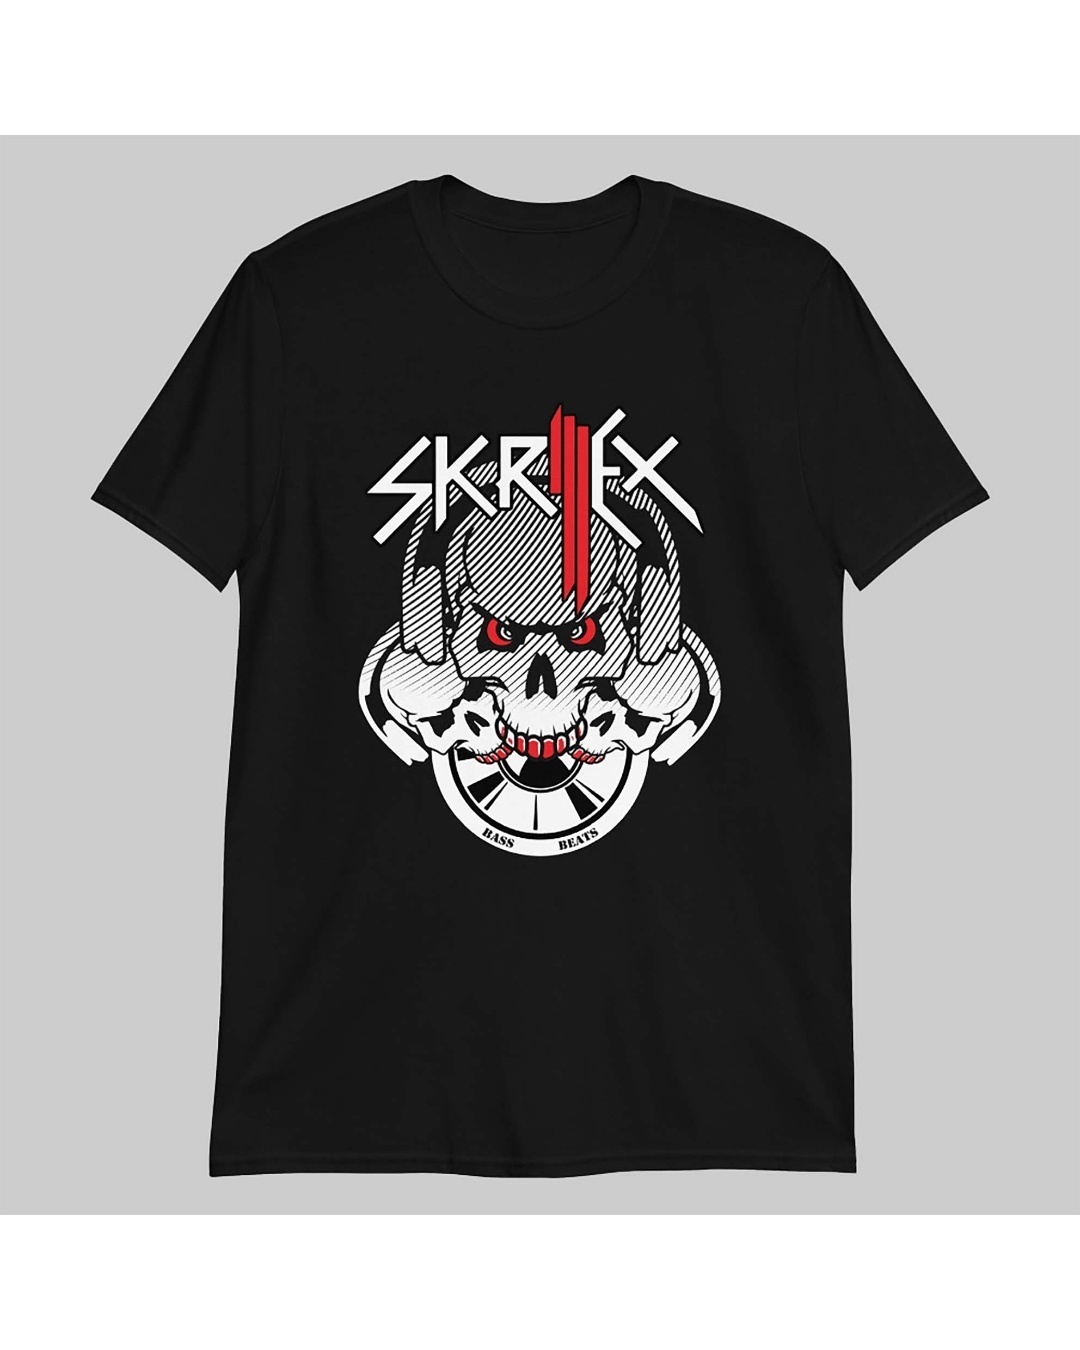 Shop Men's Black Skrillex Graphic Printed T-shirt